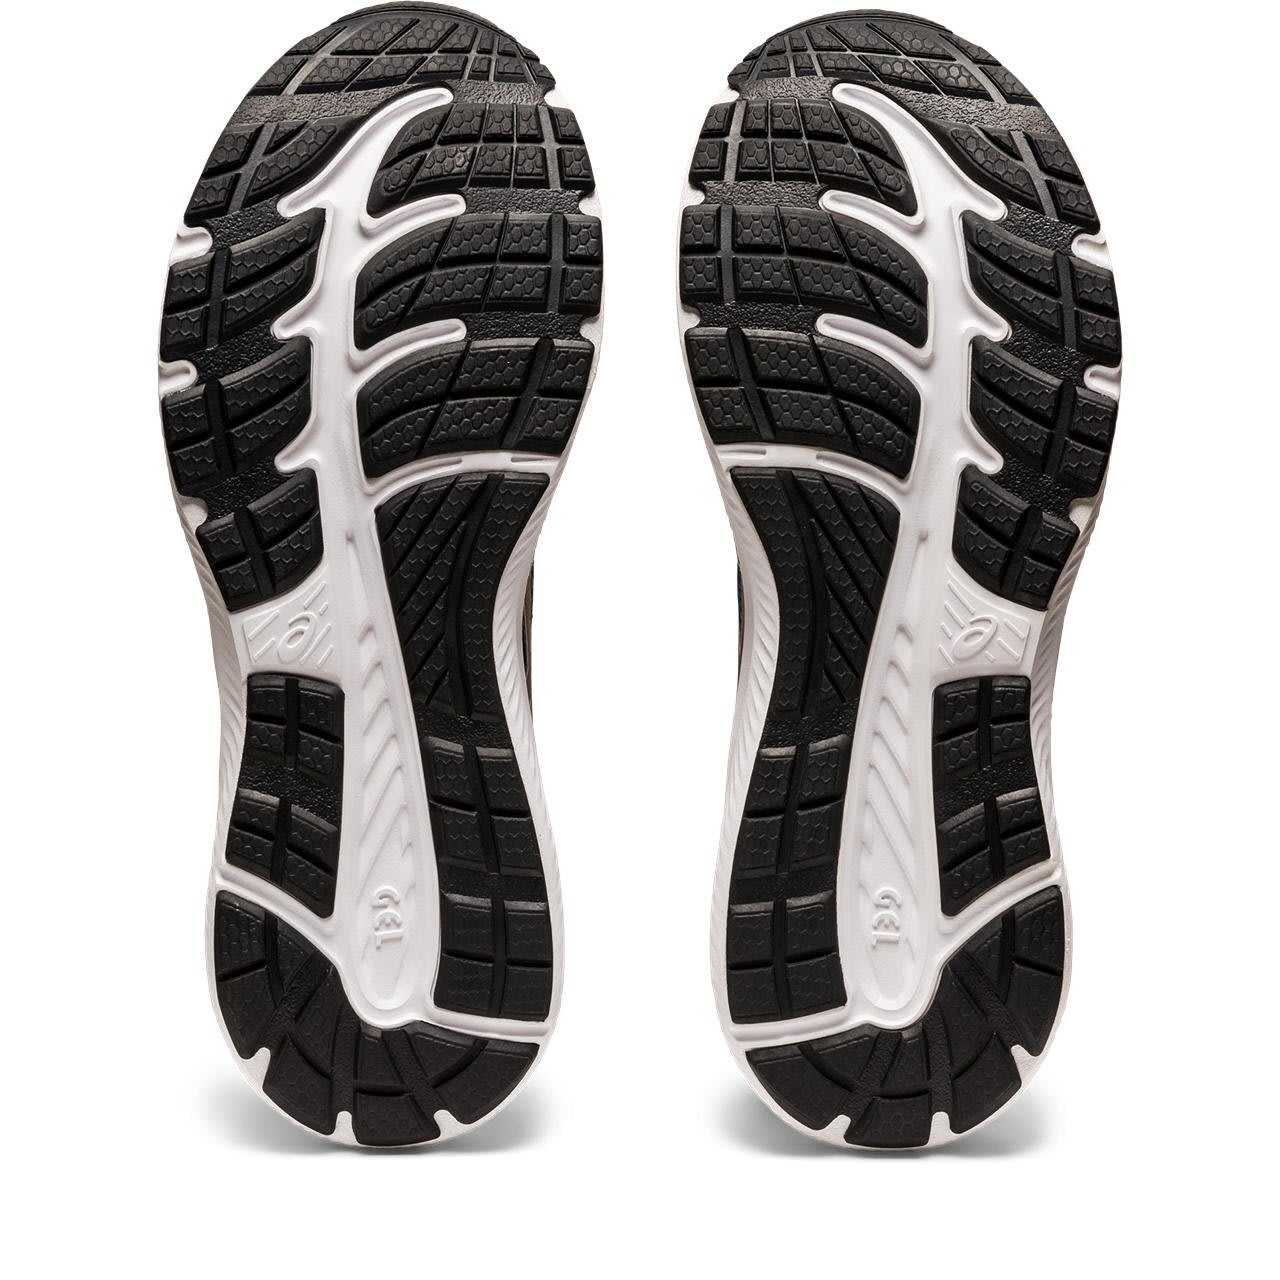 Asics Men's Gel-Contend 8 Road Running Shoes | Sportsmans Warehouse